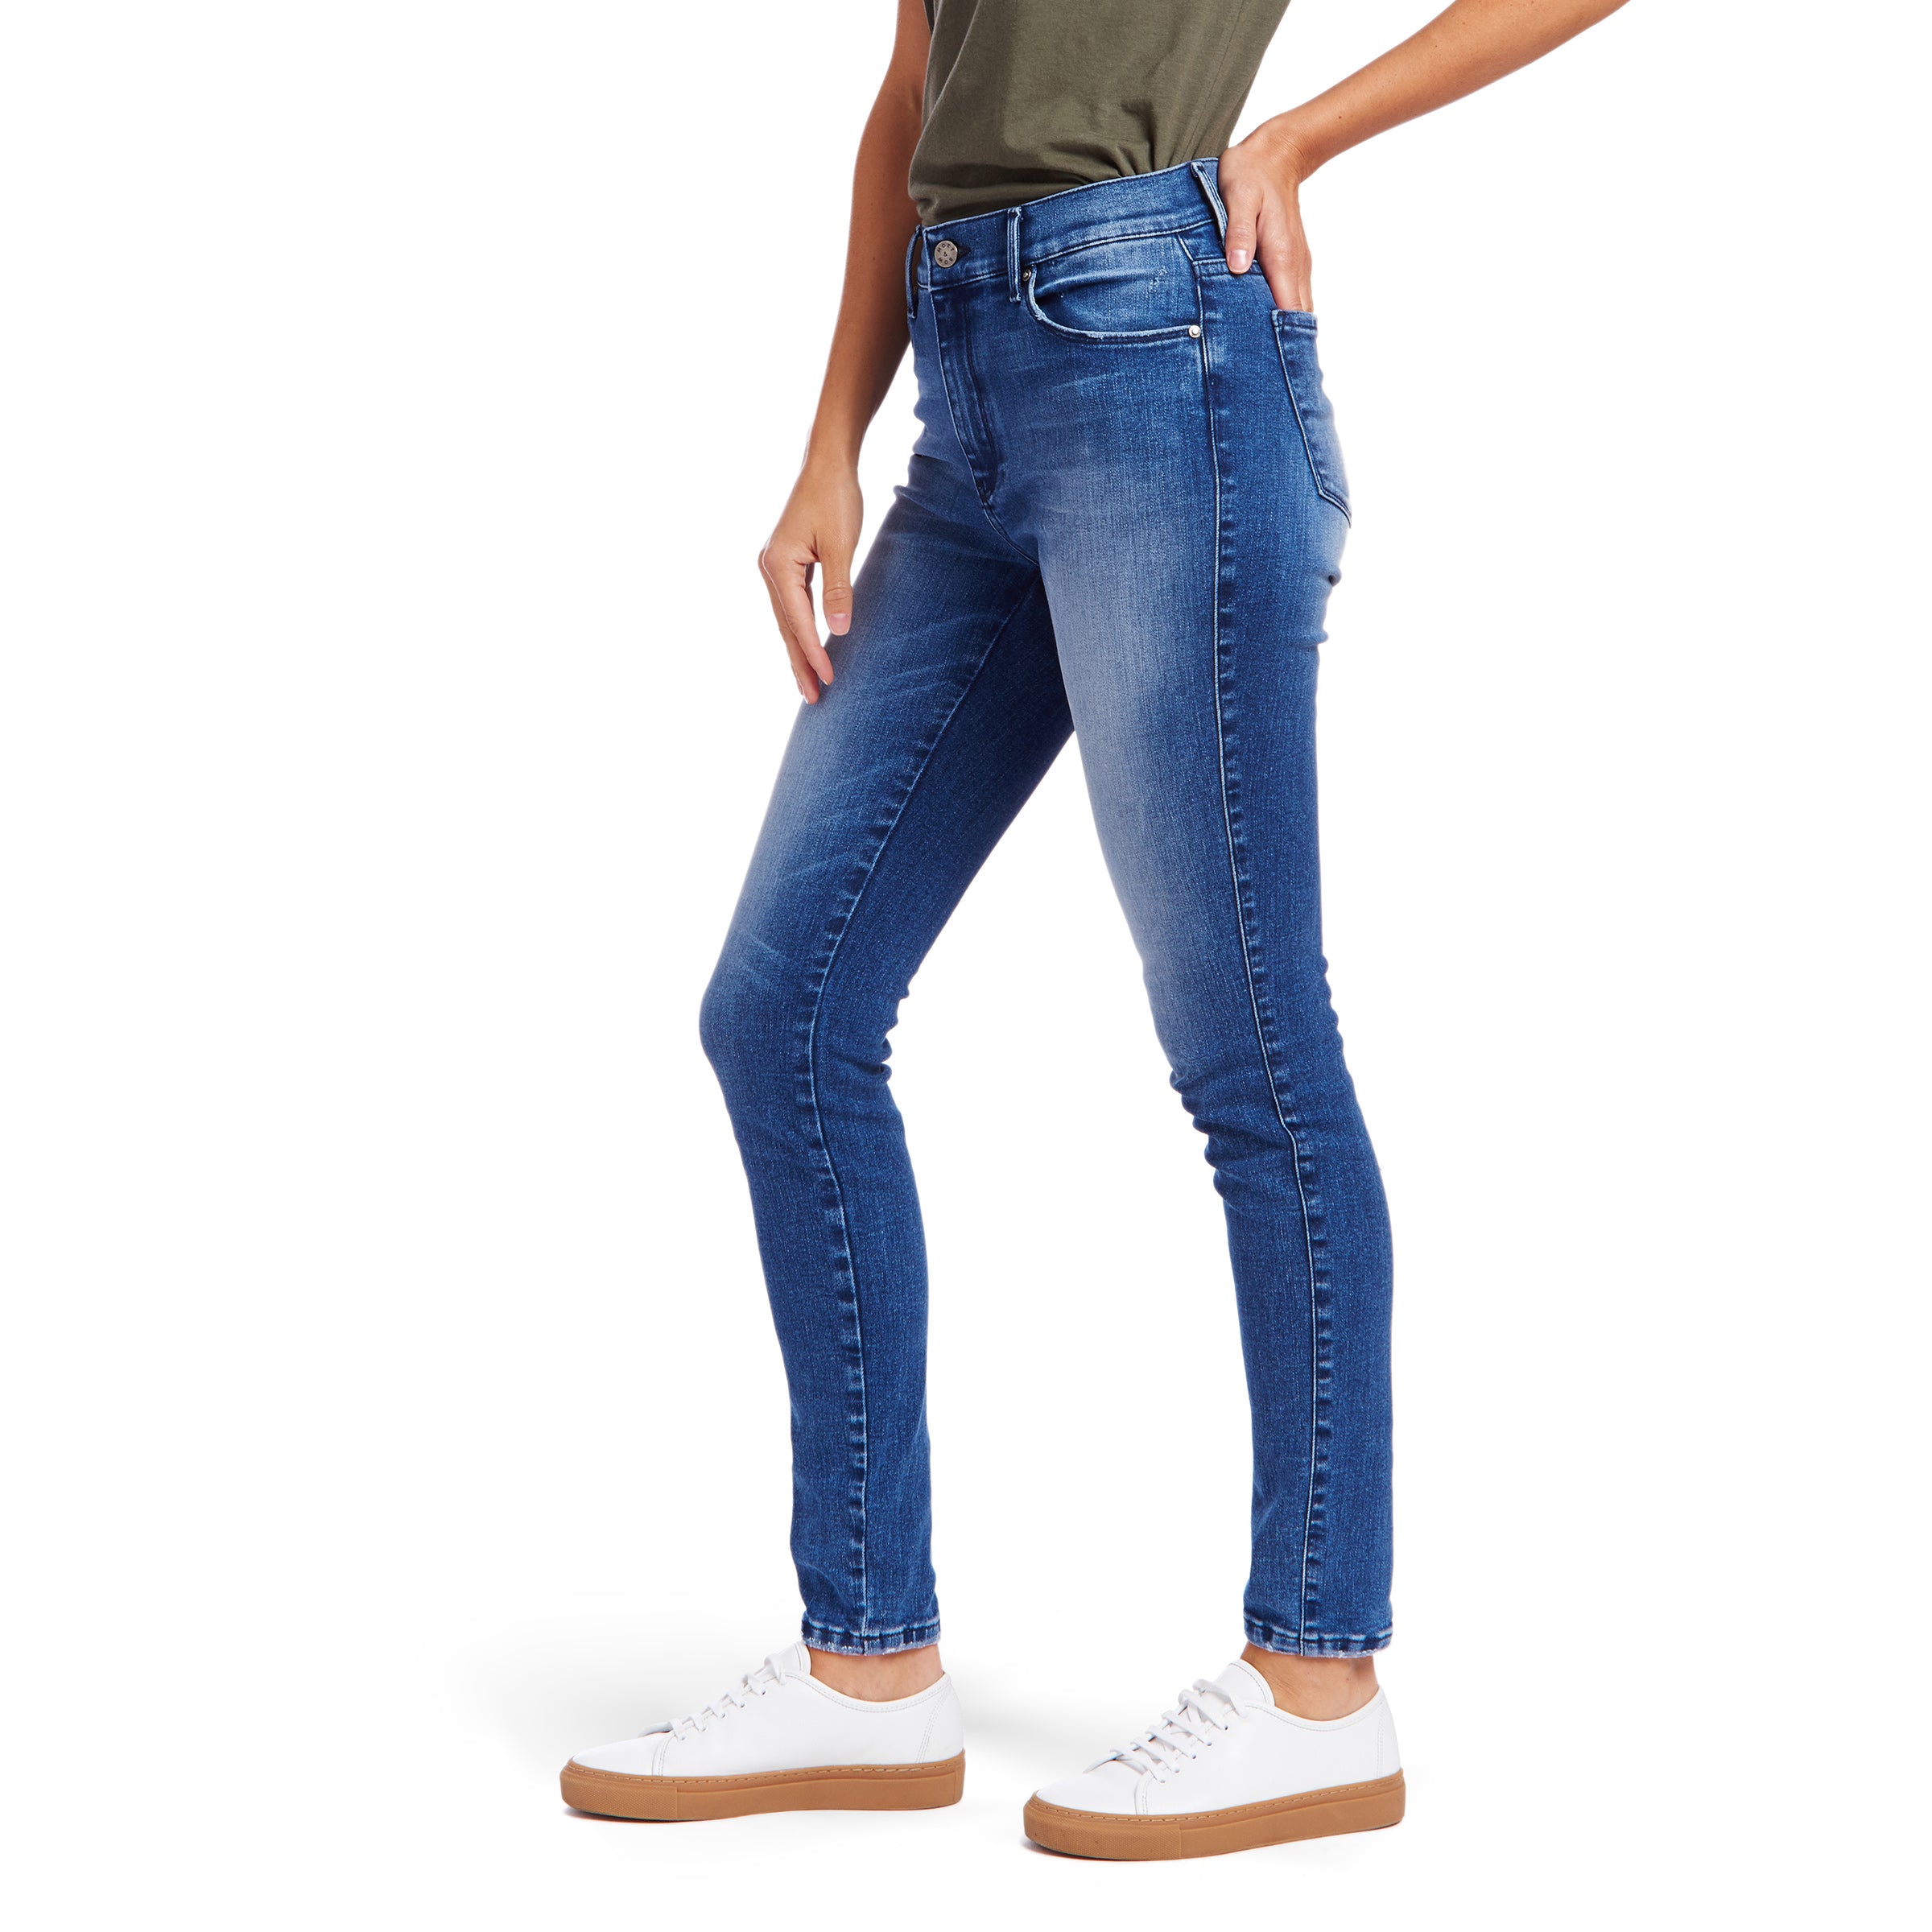 Women wearing Azul medio High Rise Skinny Moore Jeans